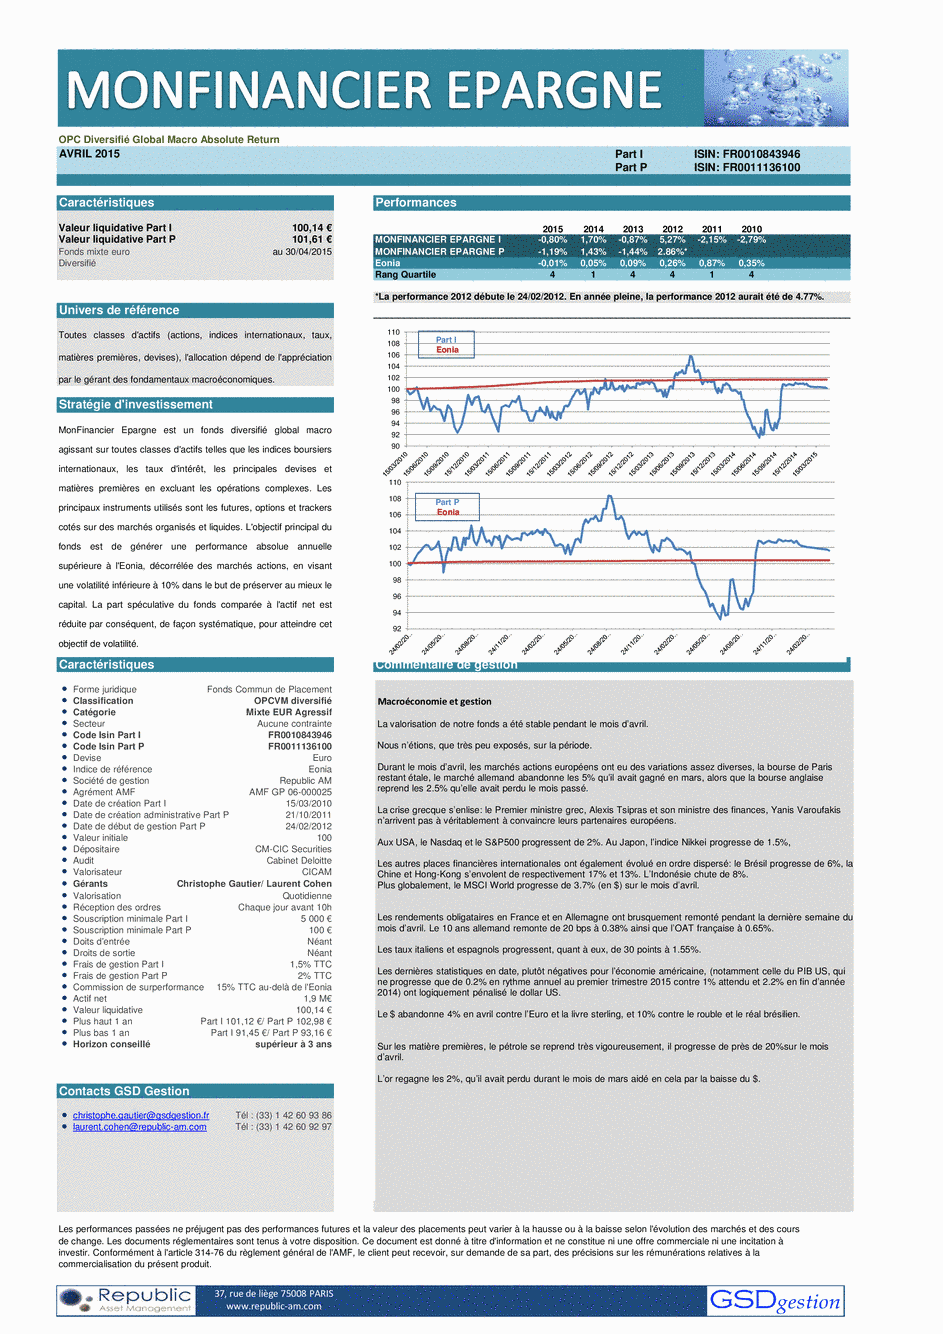 Reporting Monfinancier Epargne P - 05/05/2015 - French